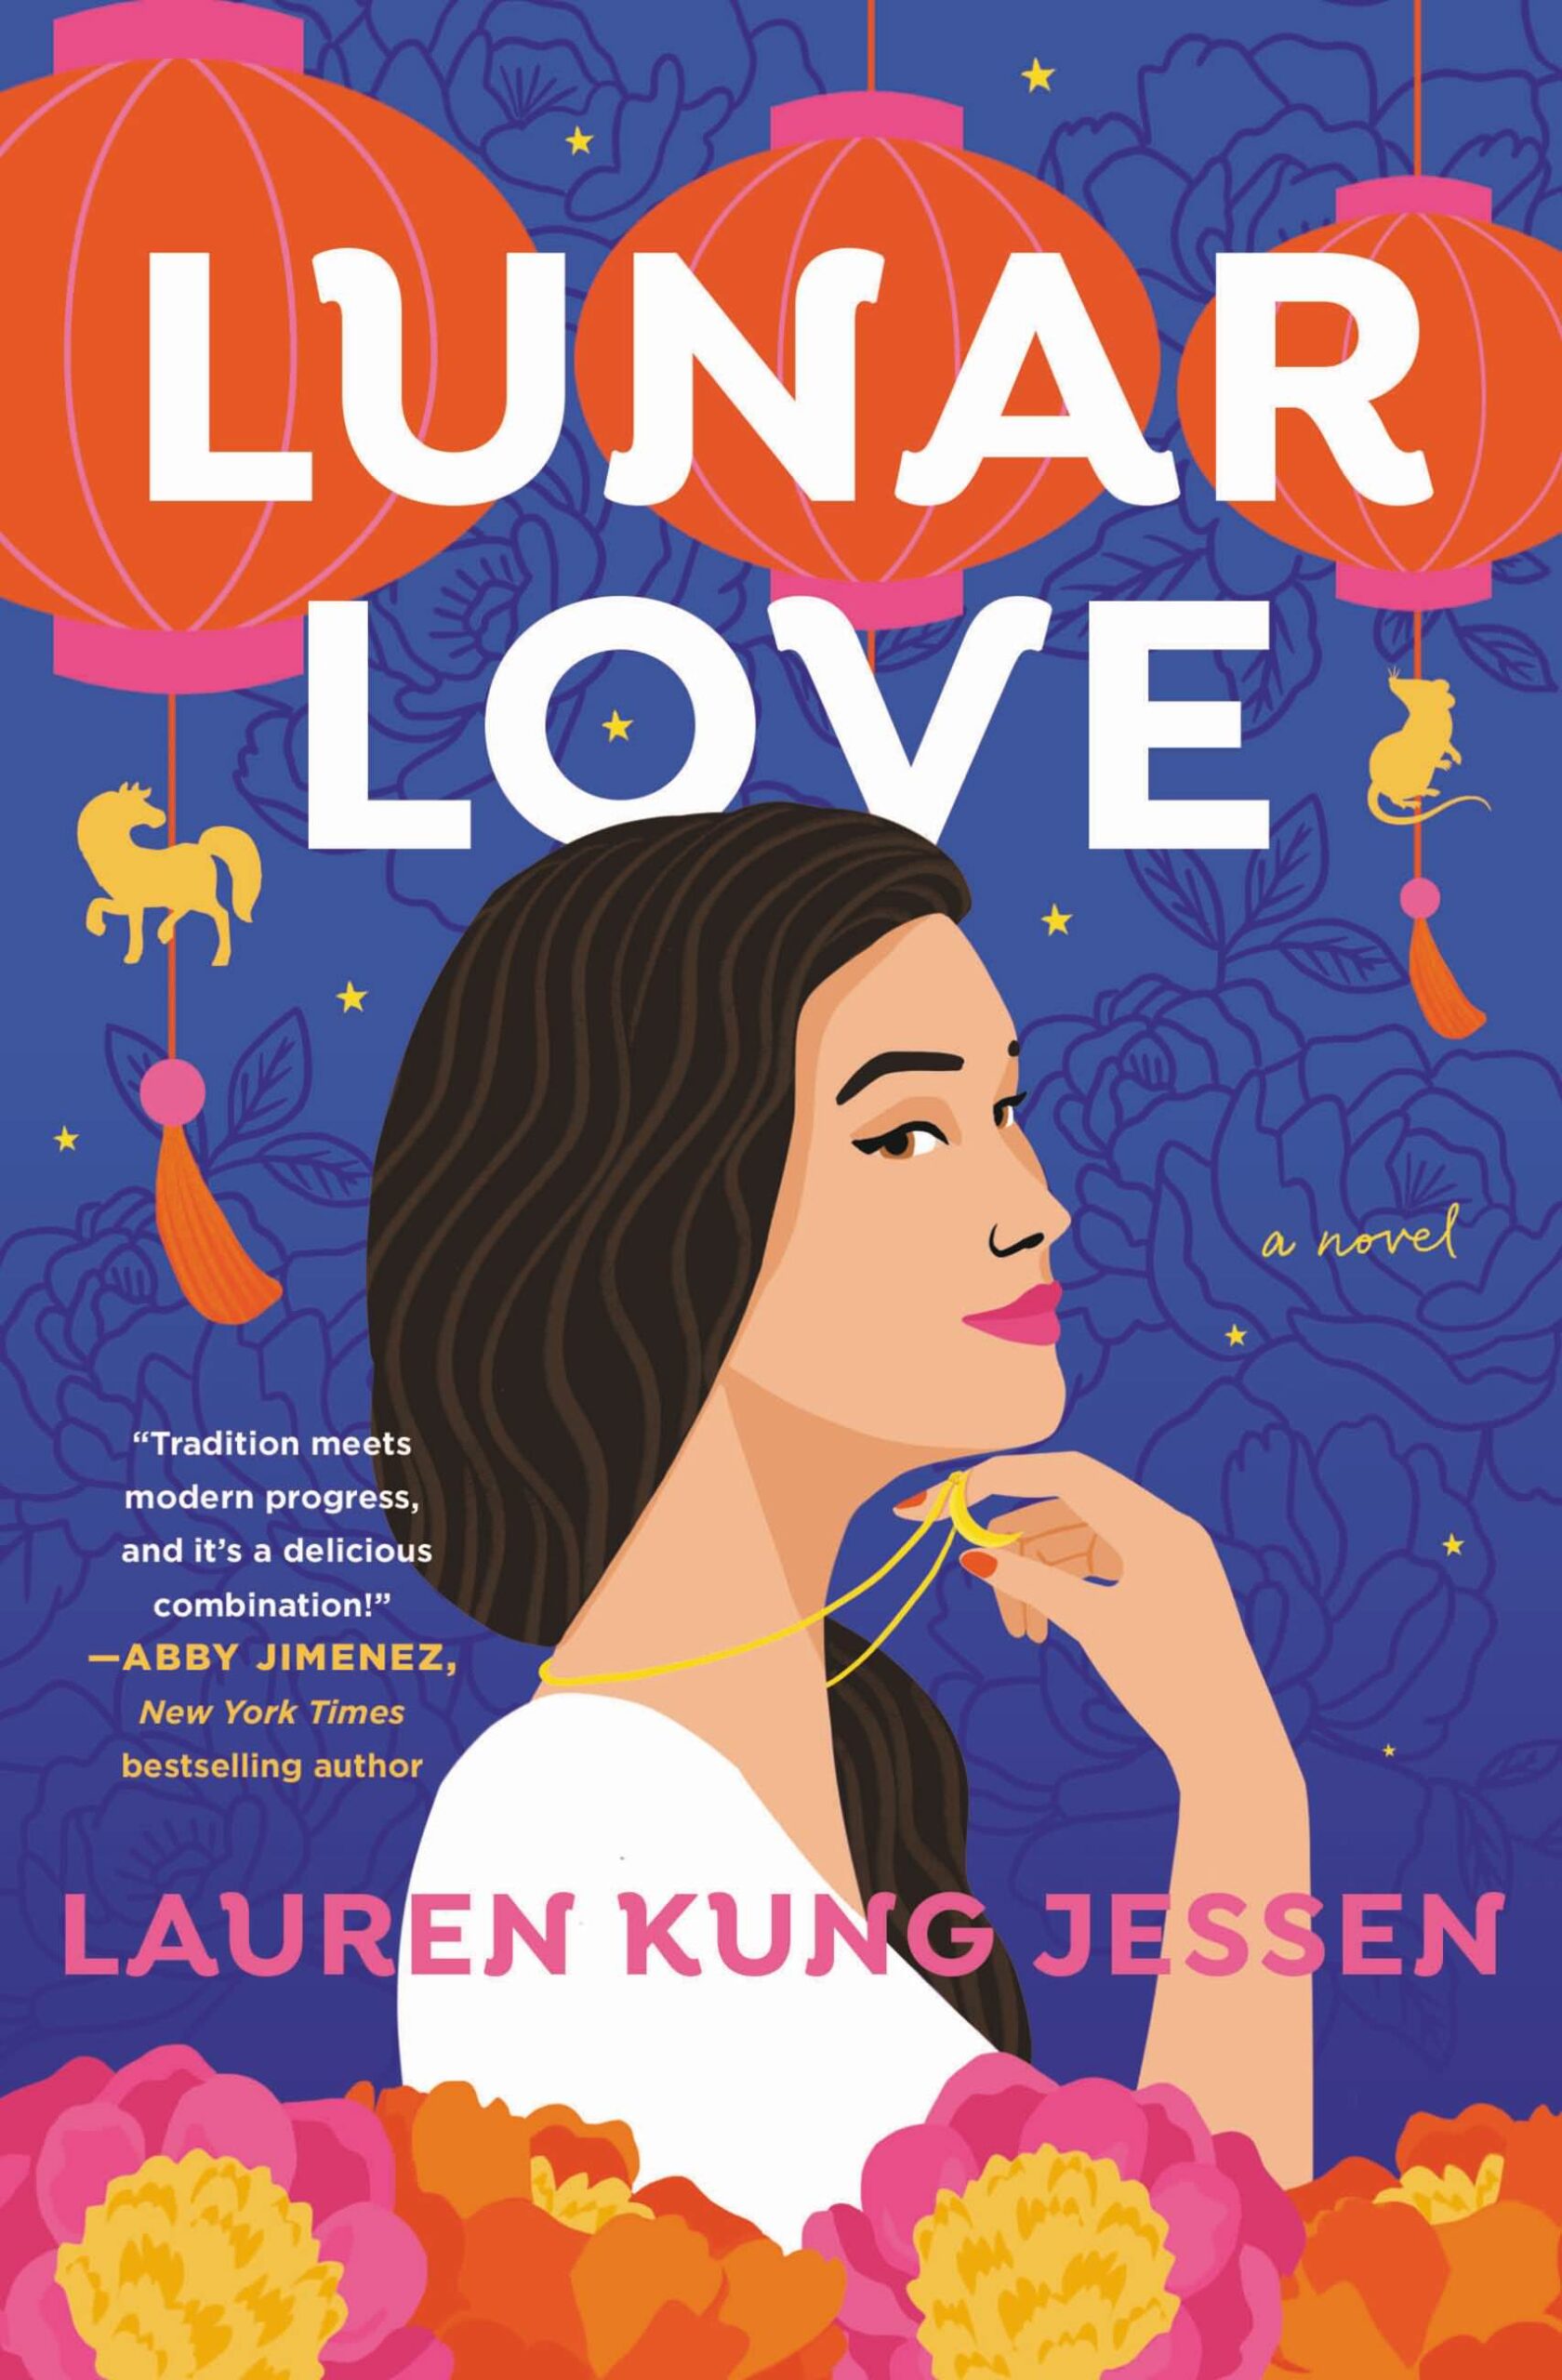 Book Cover of Lunar Love by Lauren Kung Jessen